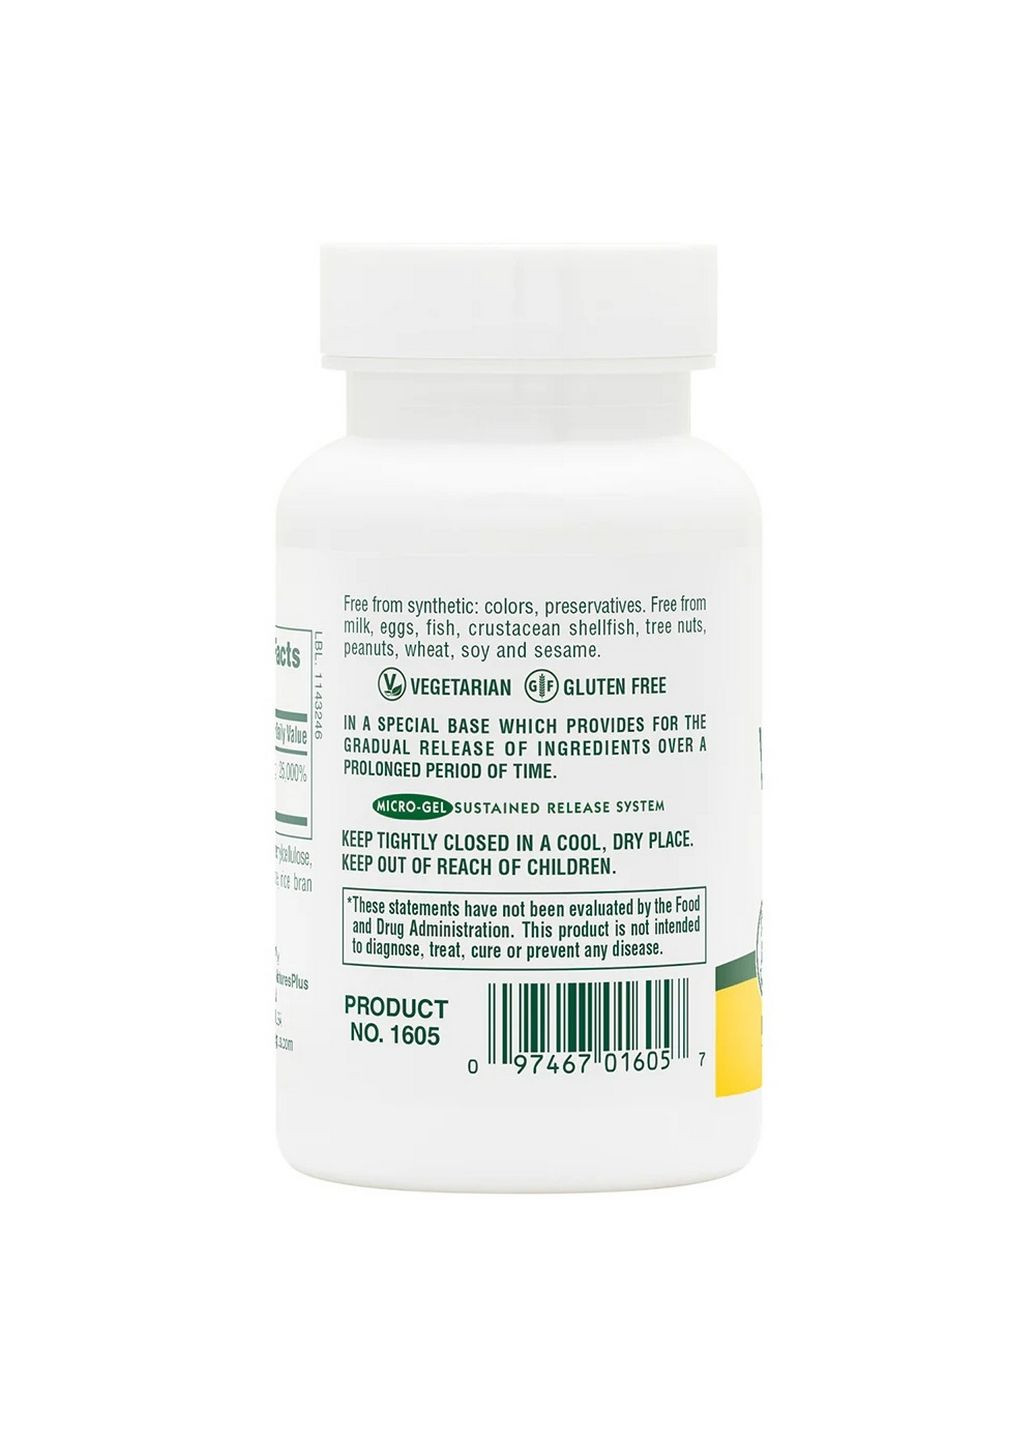 Витамины и минералы Vitamin B1 300 mg, 90 таблеток Natures Plus (293338229)